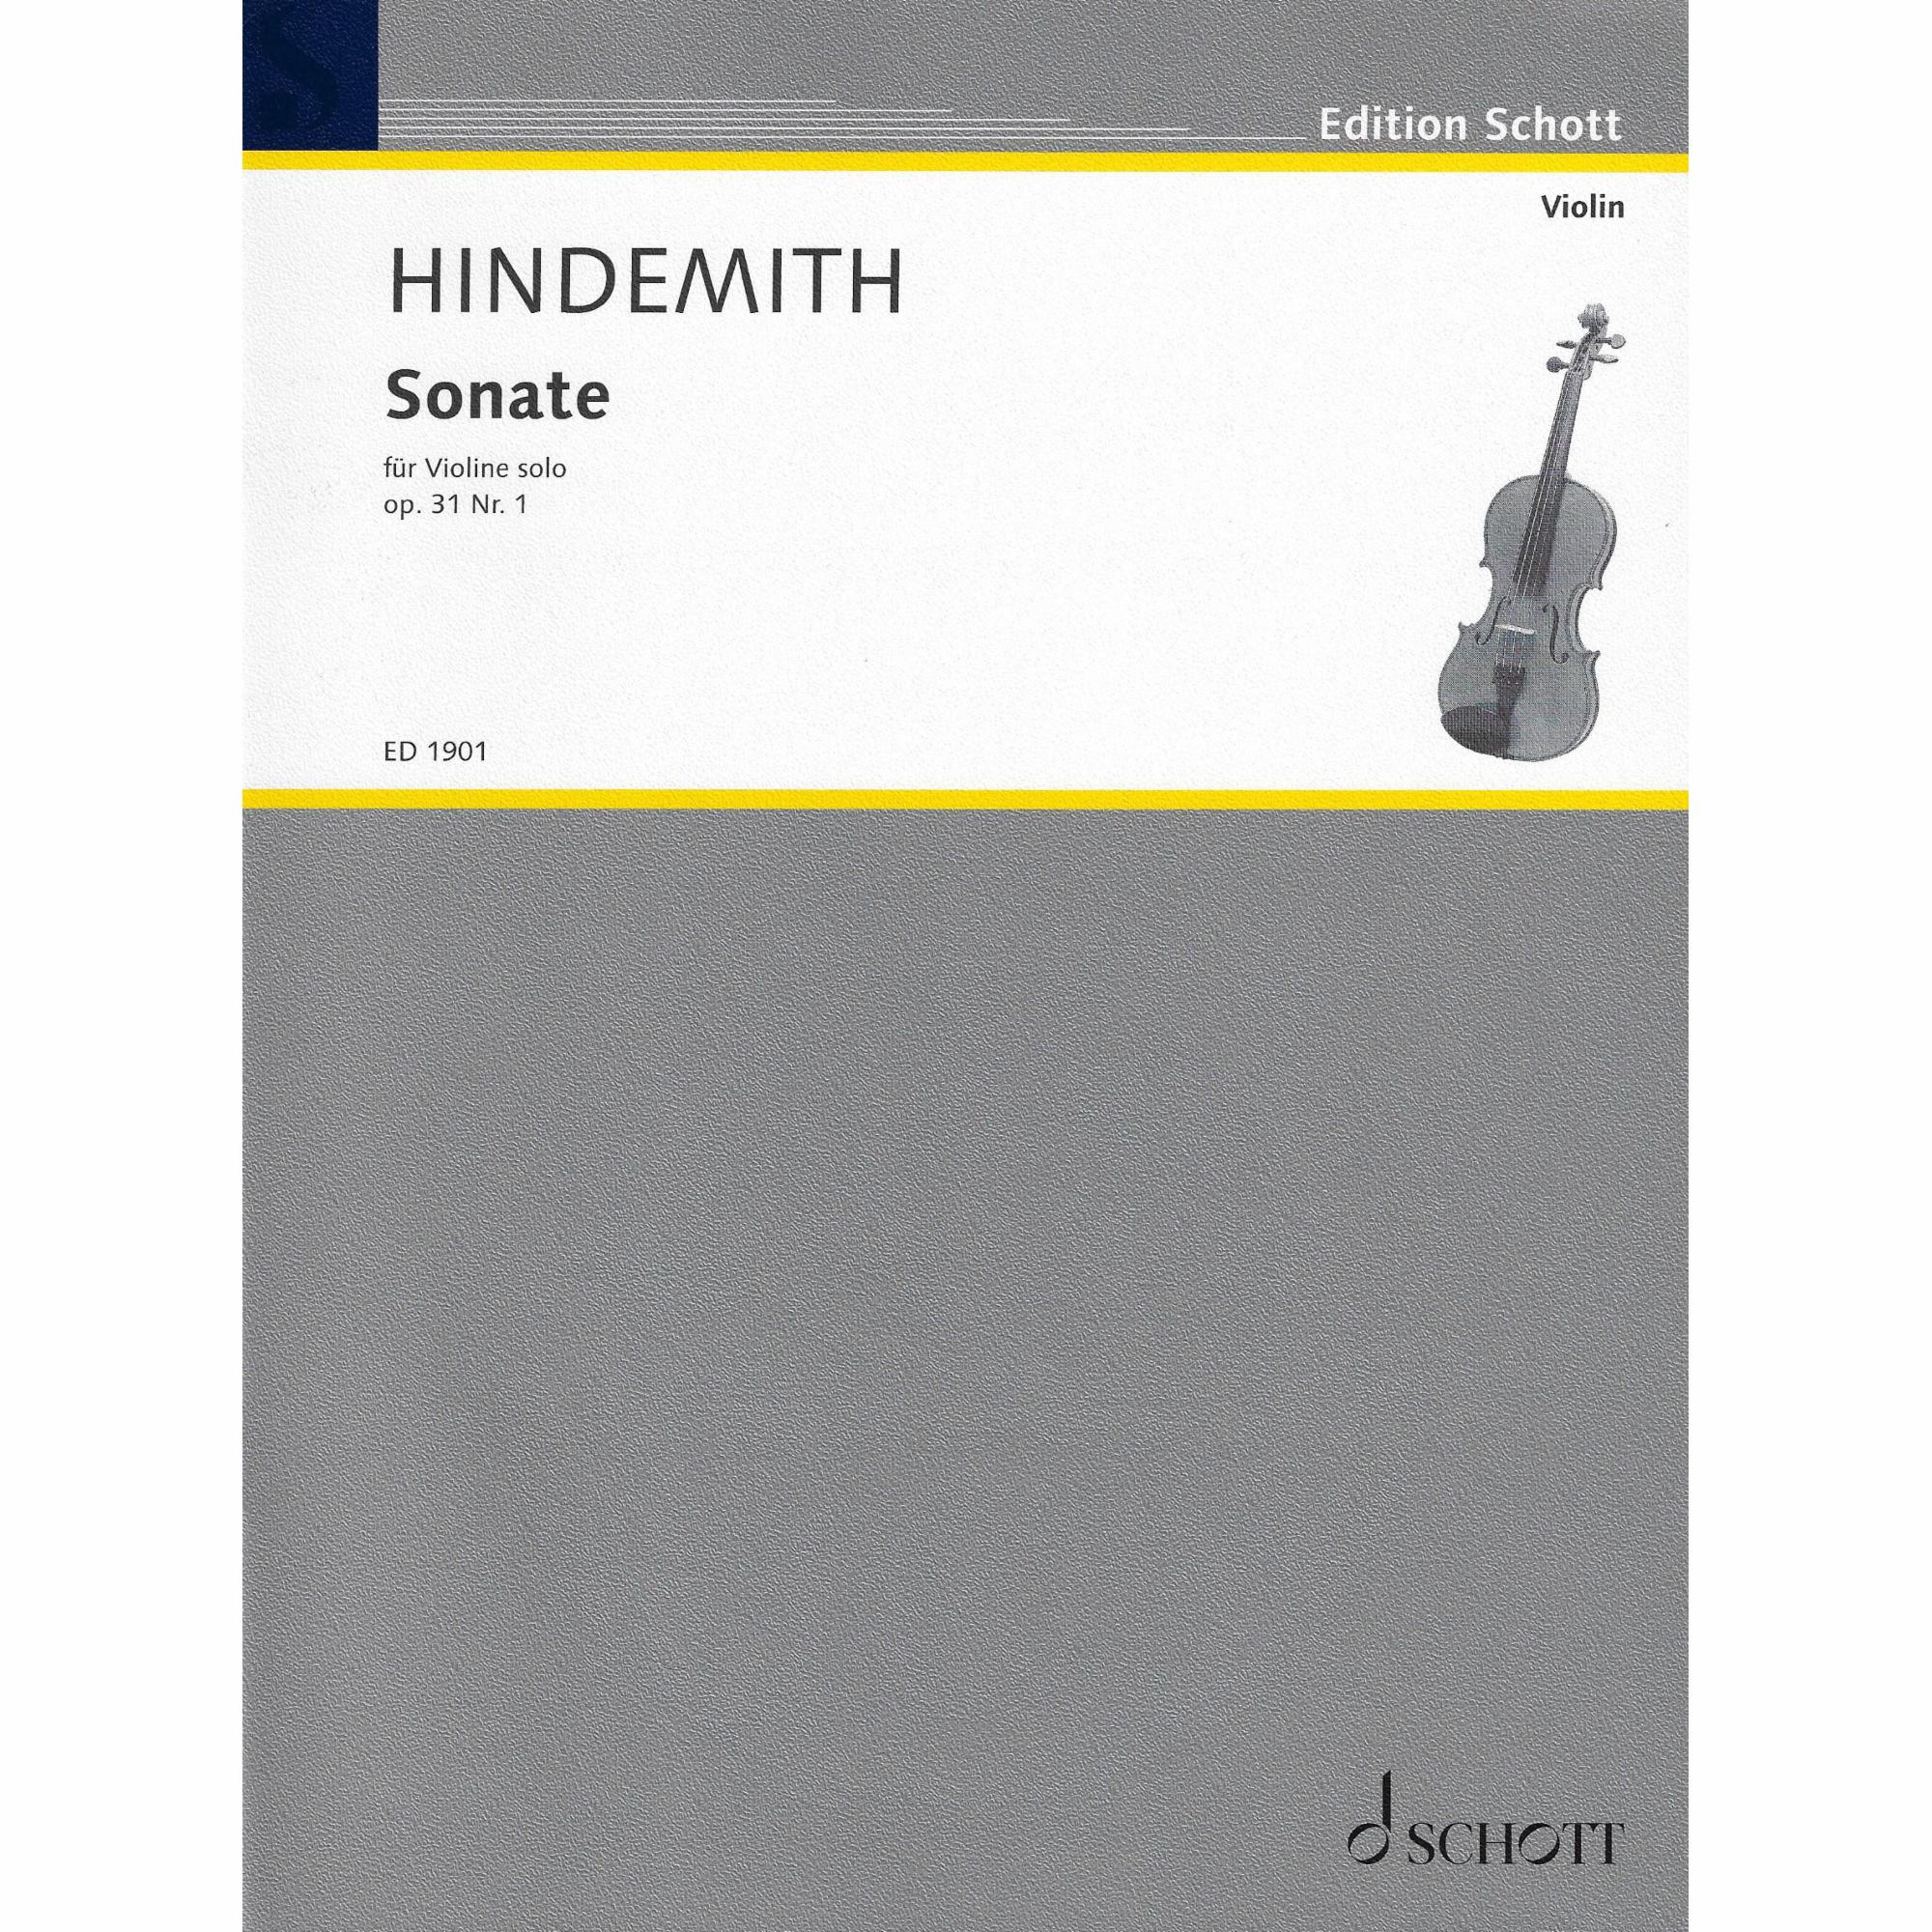 Hindemith -- Sonata, Op. 31, No. 1 for Solo Violin